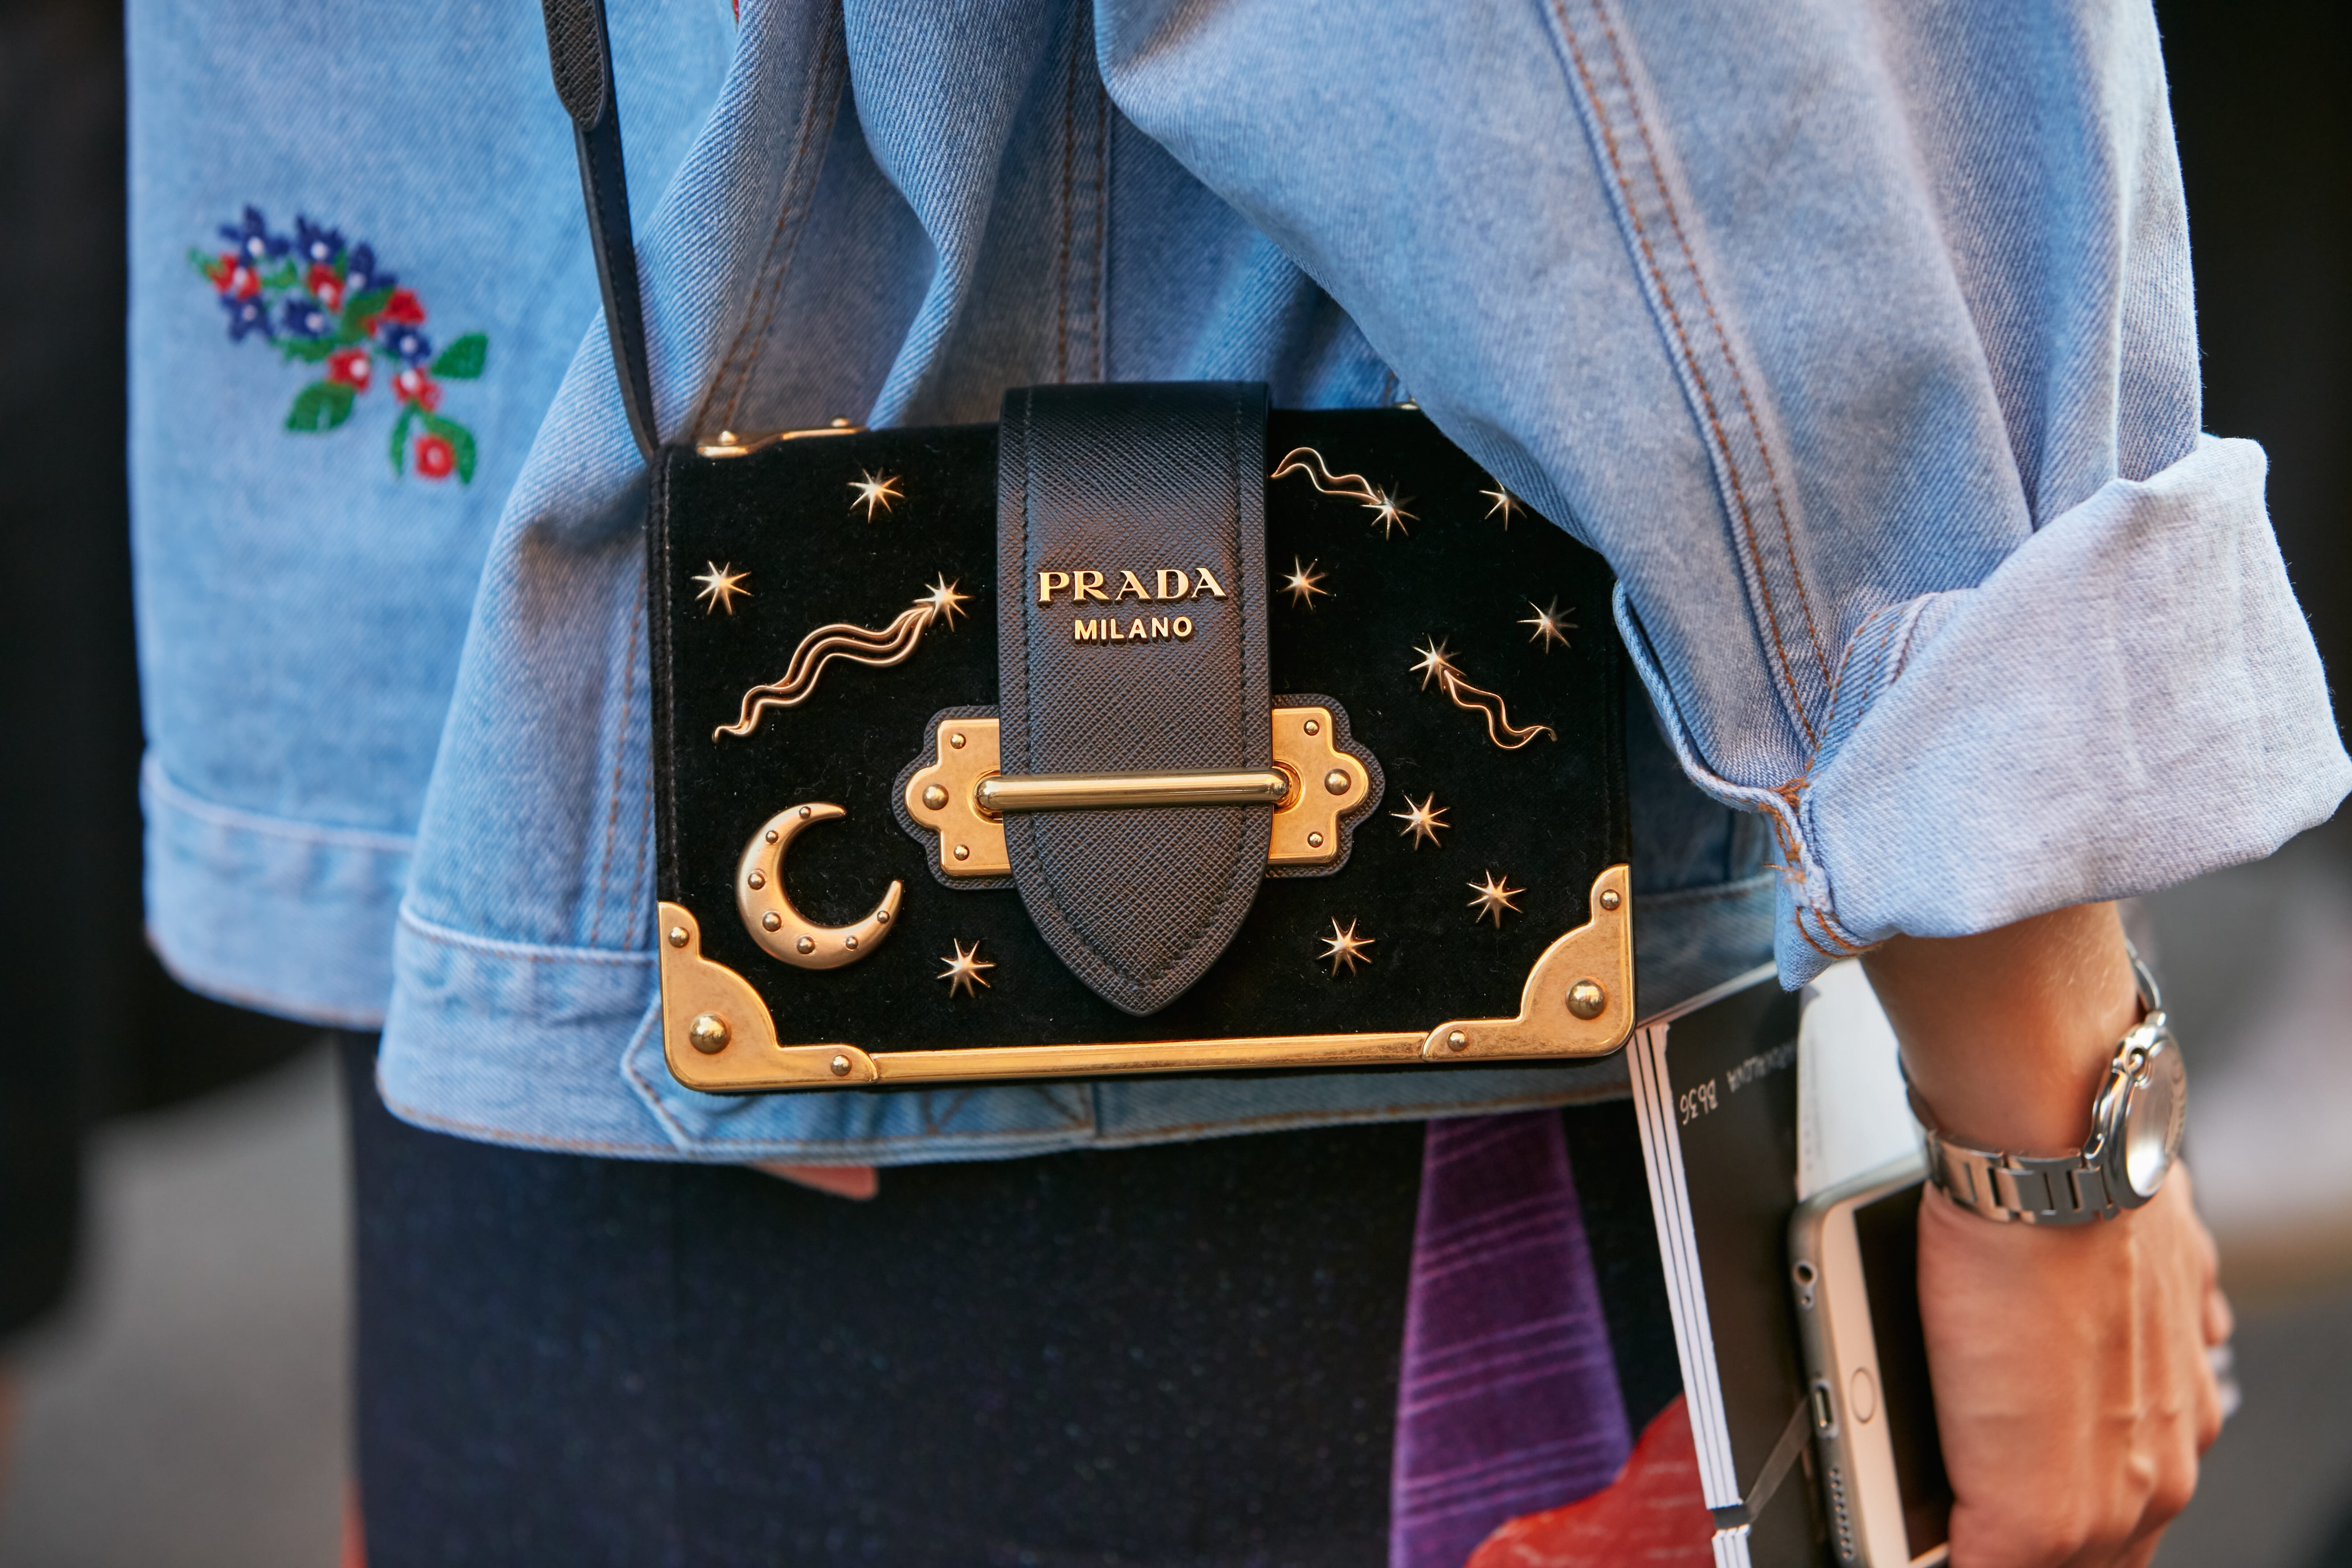 A fashion week attendee dons a Prada bag